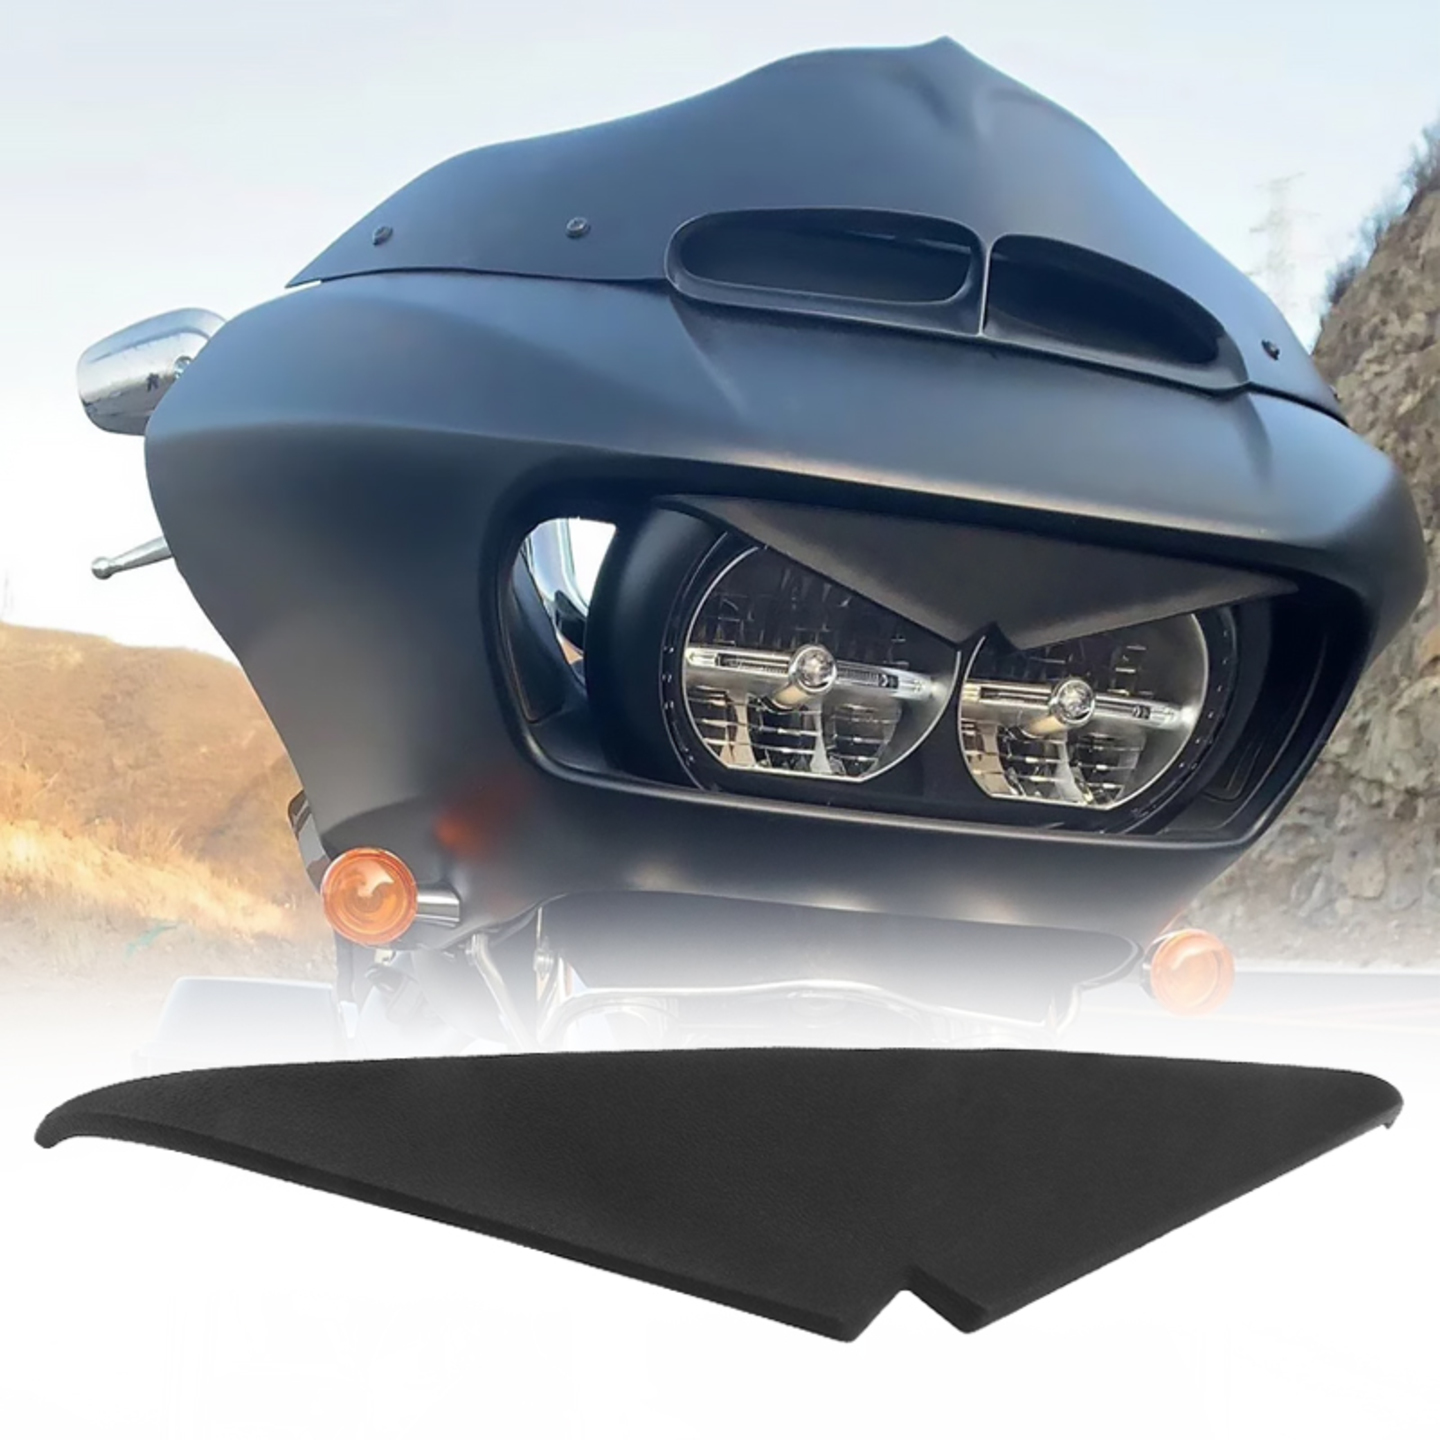 Harley Davidson road glide headlight decorative head light lamp angry cover eye mad fierce